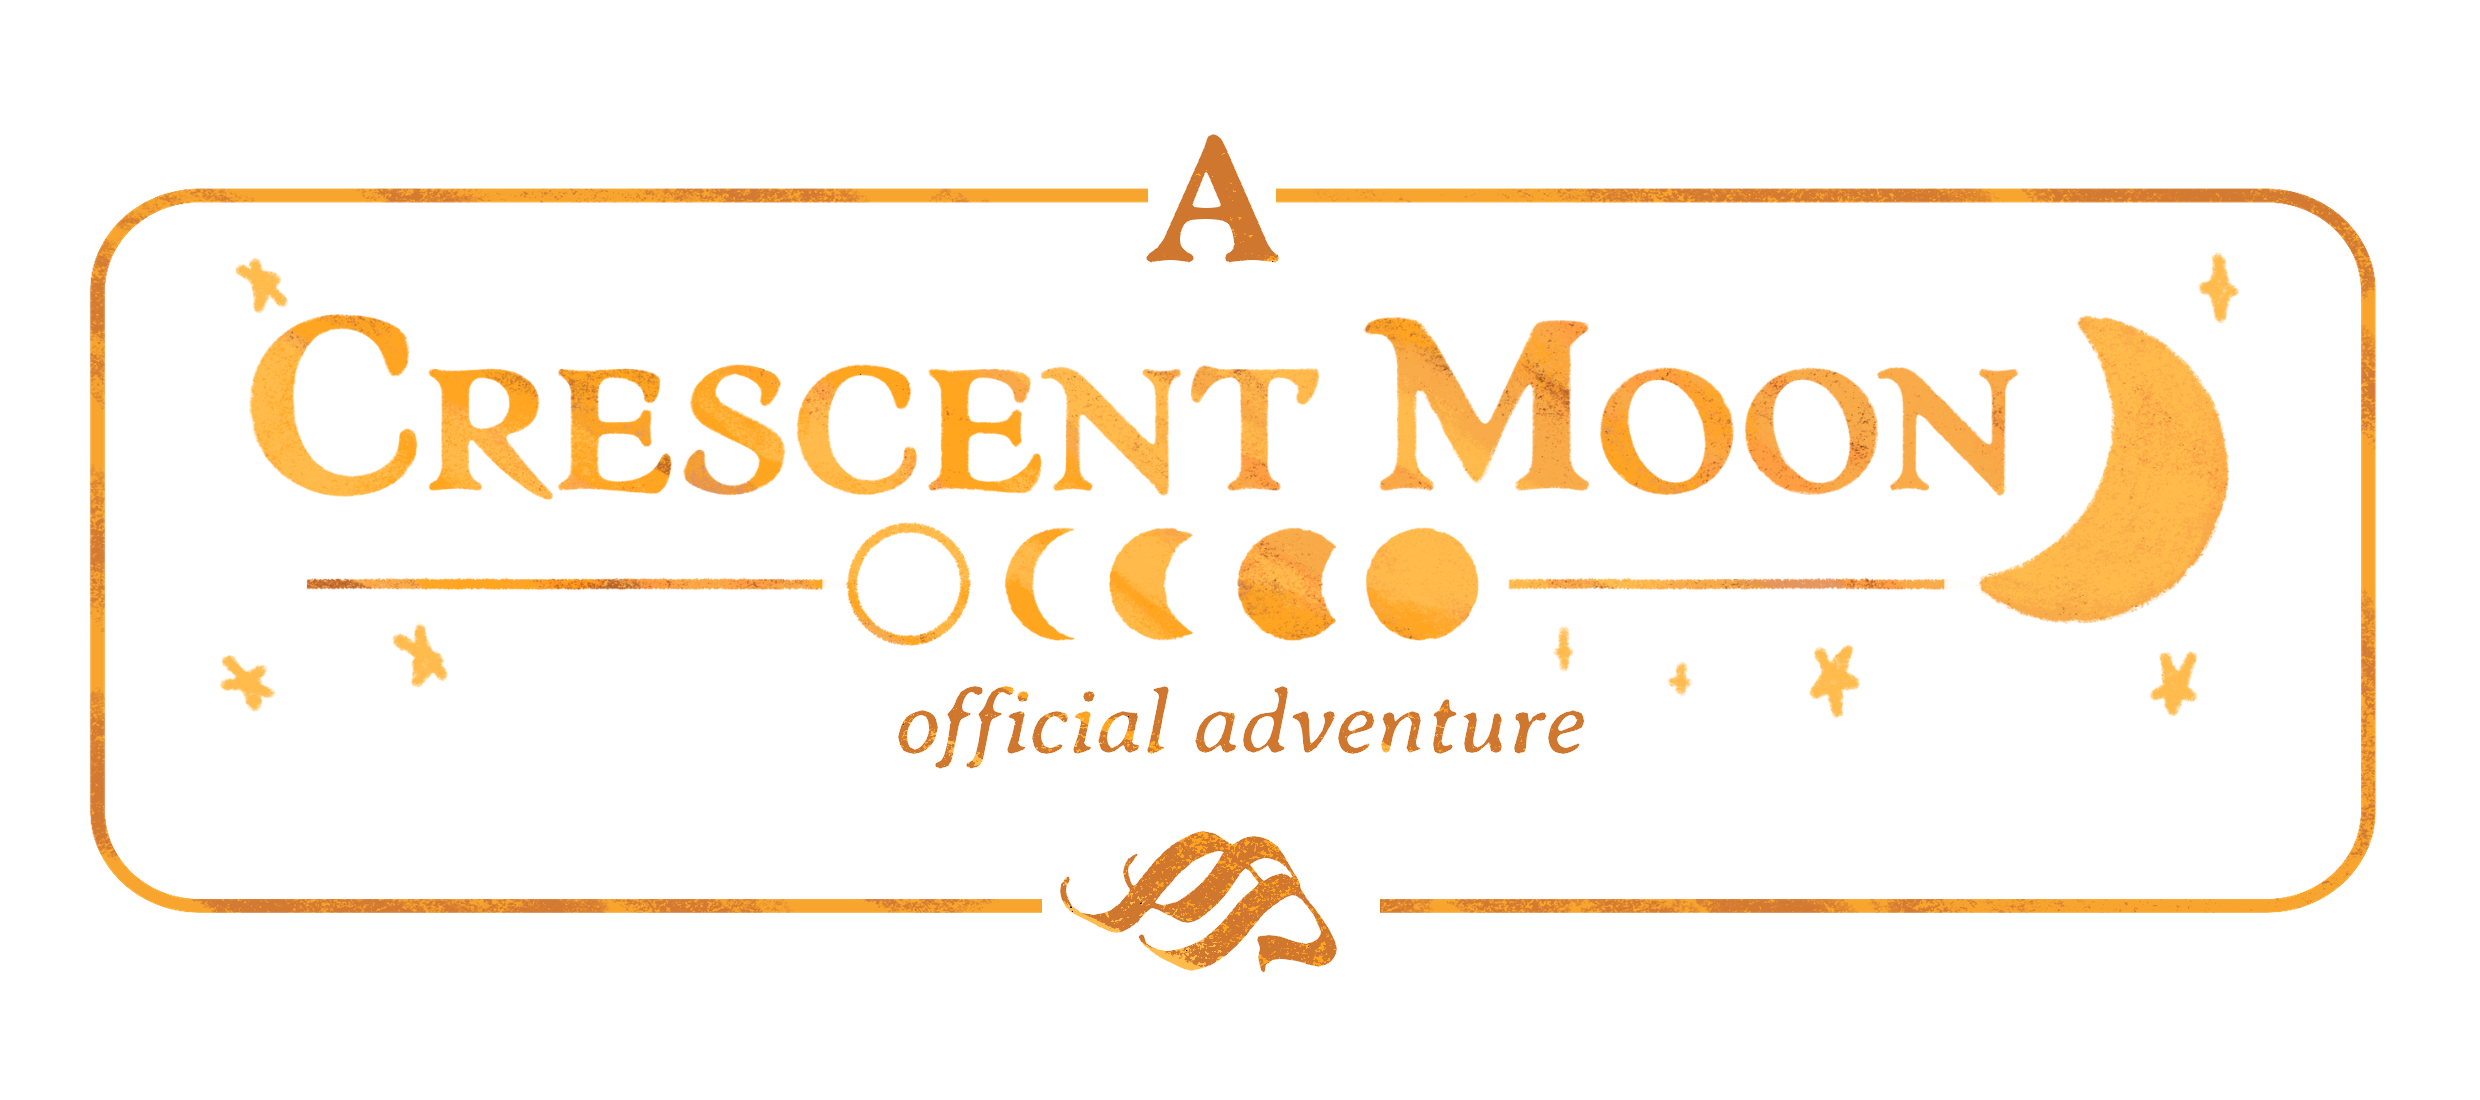 A Crescent Moon Official Adventure